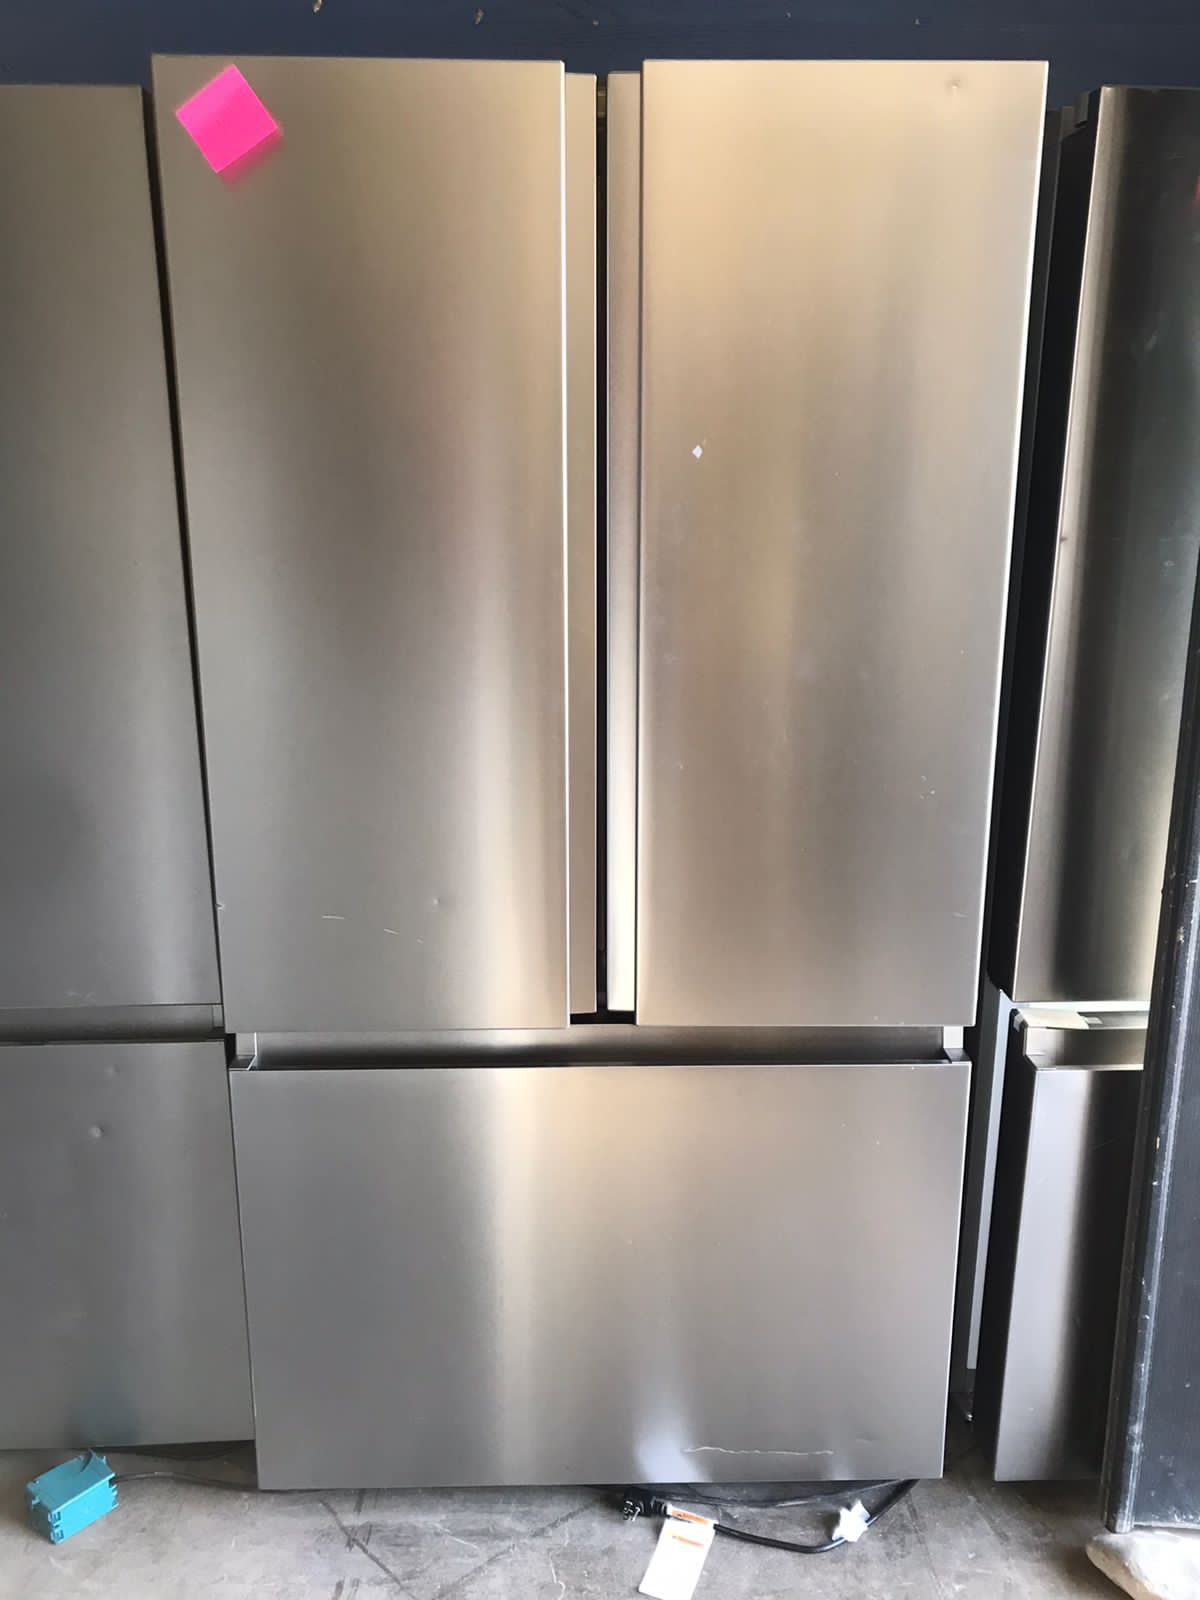 Refrigerator Hisense 